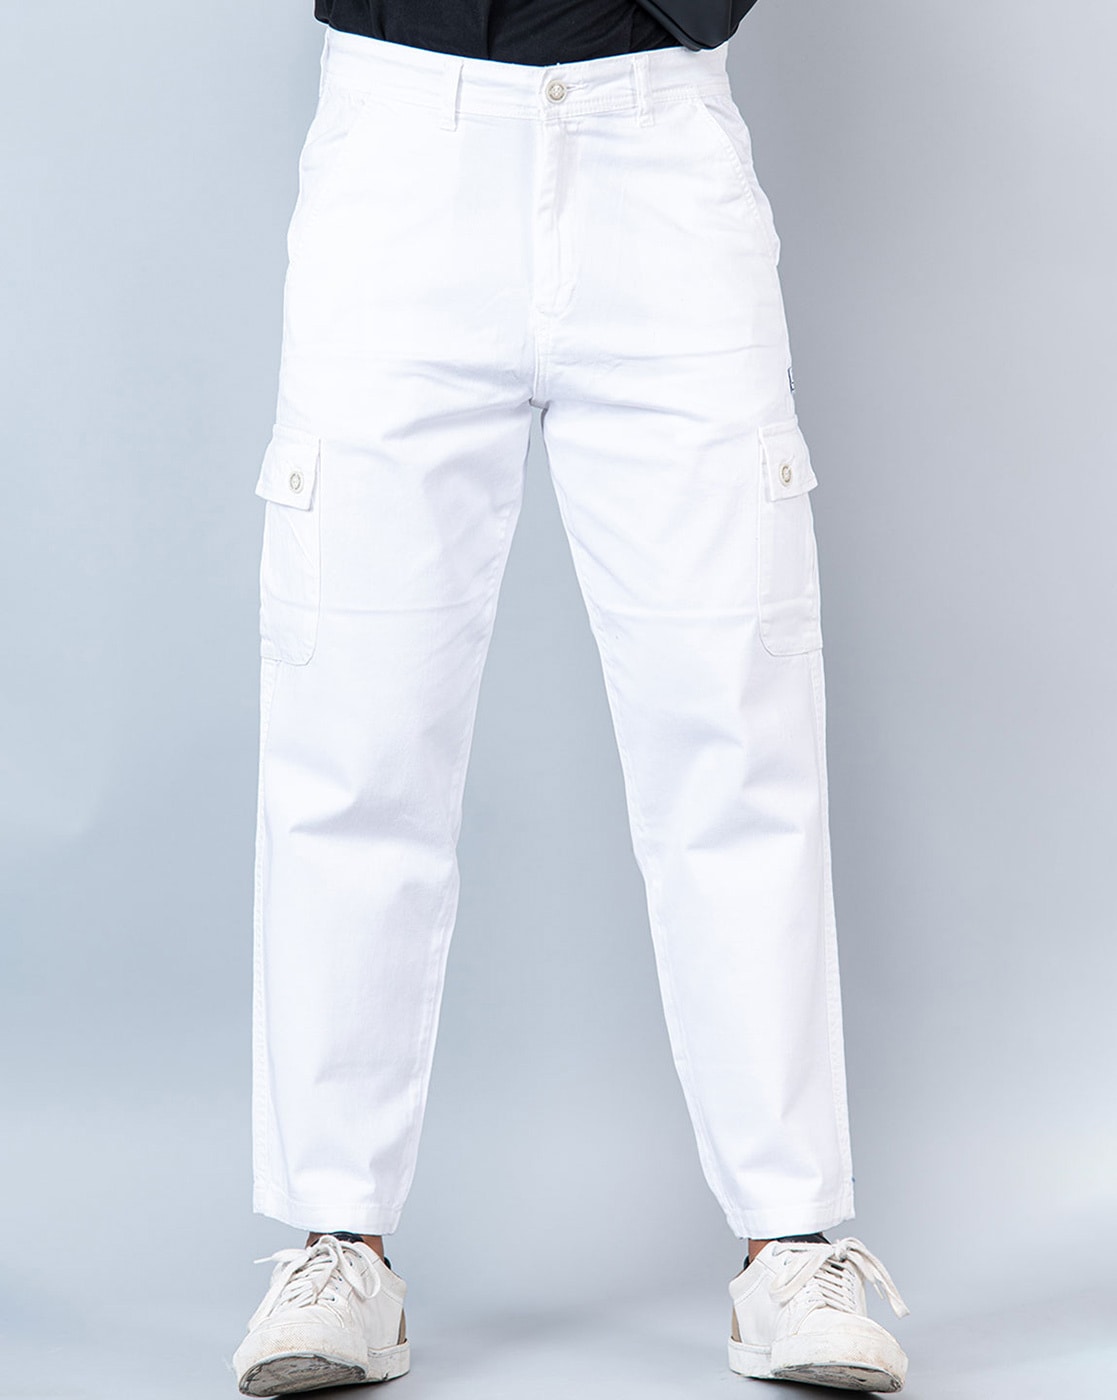 MENS WHITE CARGO PANTS | Mens pants fashion casual, Mens pants fashion,  Jackets men fashion